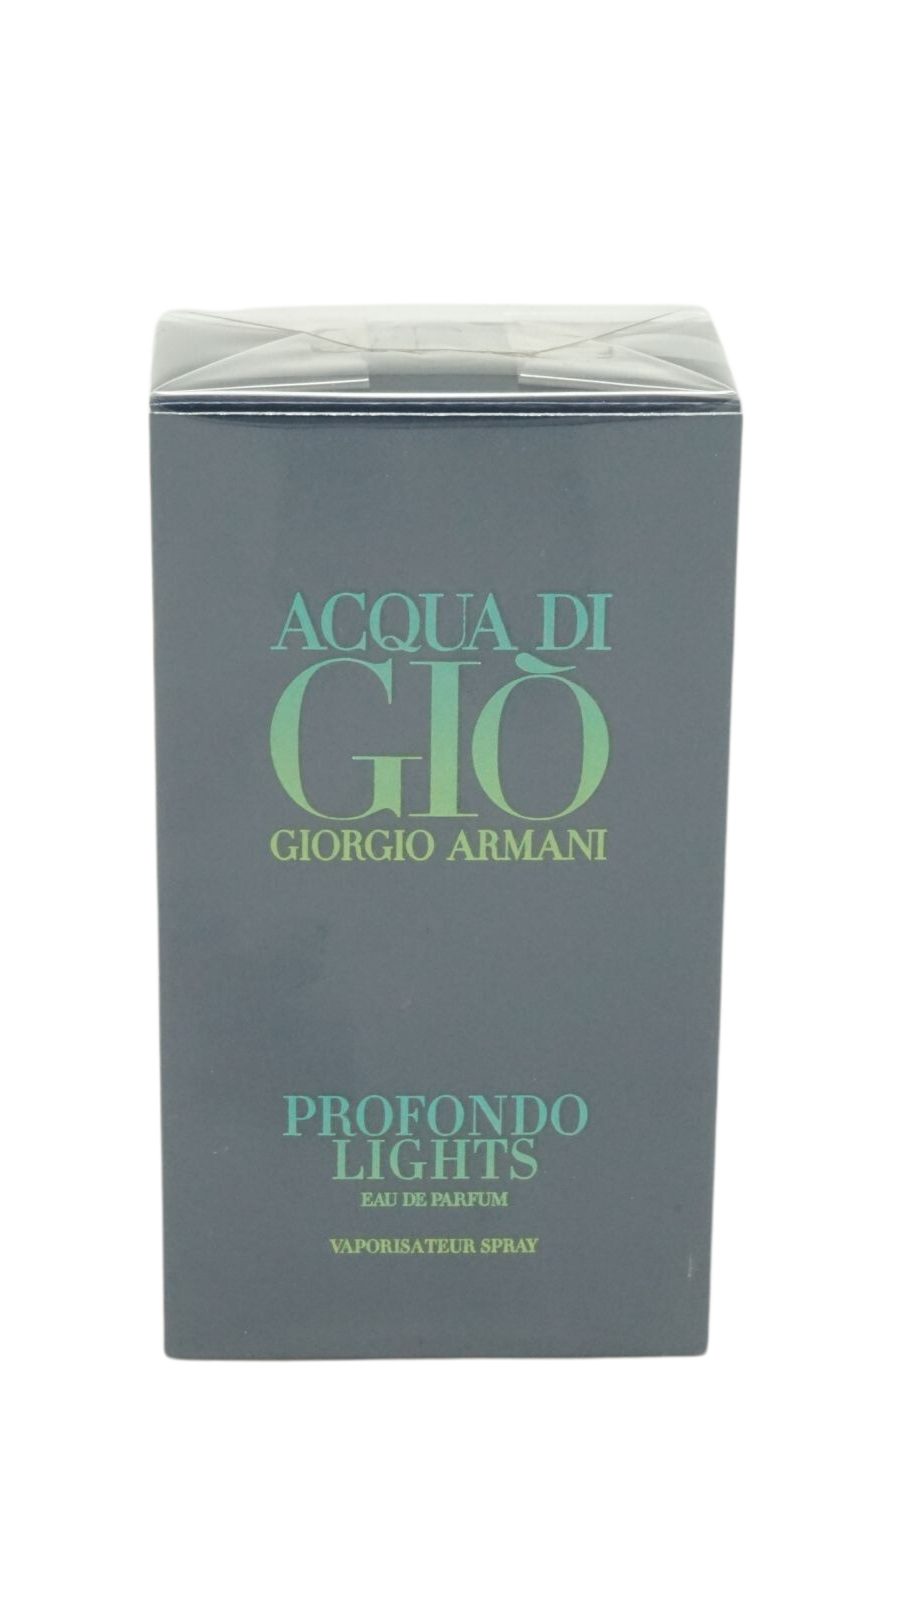 Acqua Giorgio de Eau Eau Toilette di 40ml Armani Armani Lights Giorgio Gio Profondo de parfum